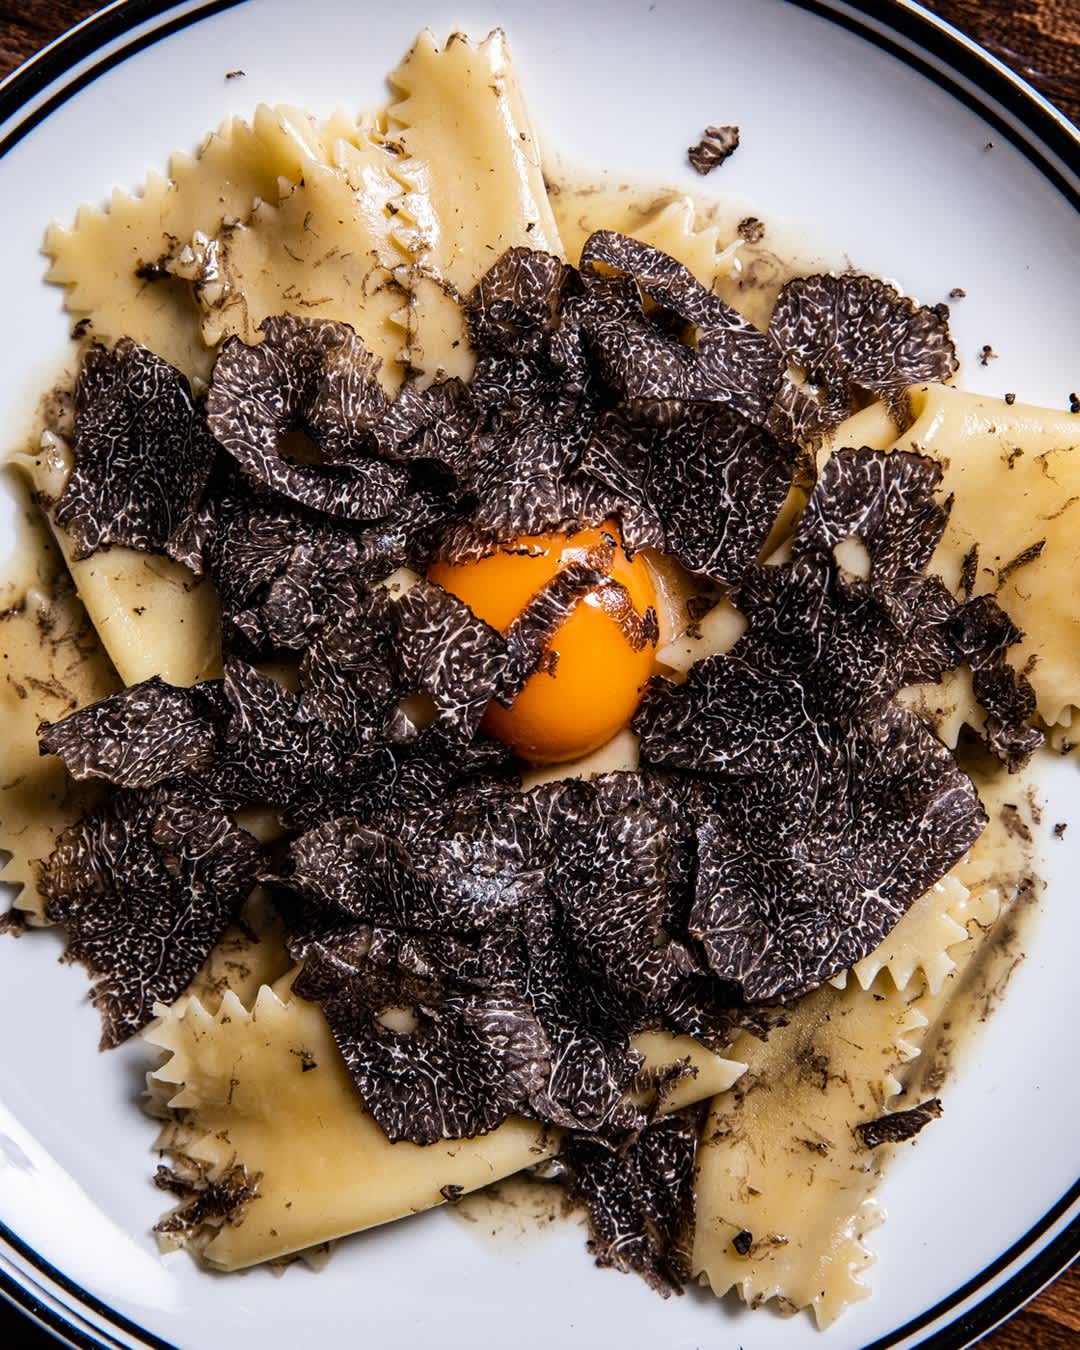 best truffle dishes sydney Ragazzi